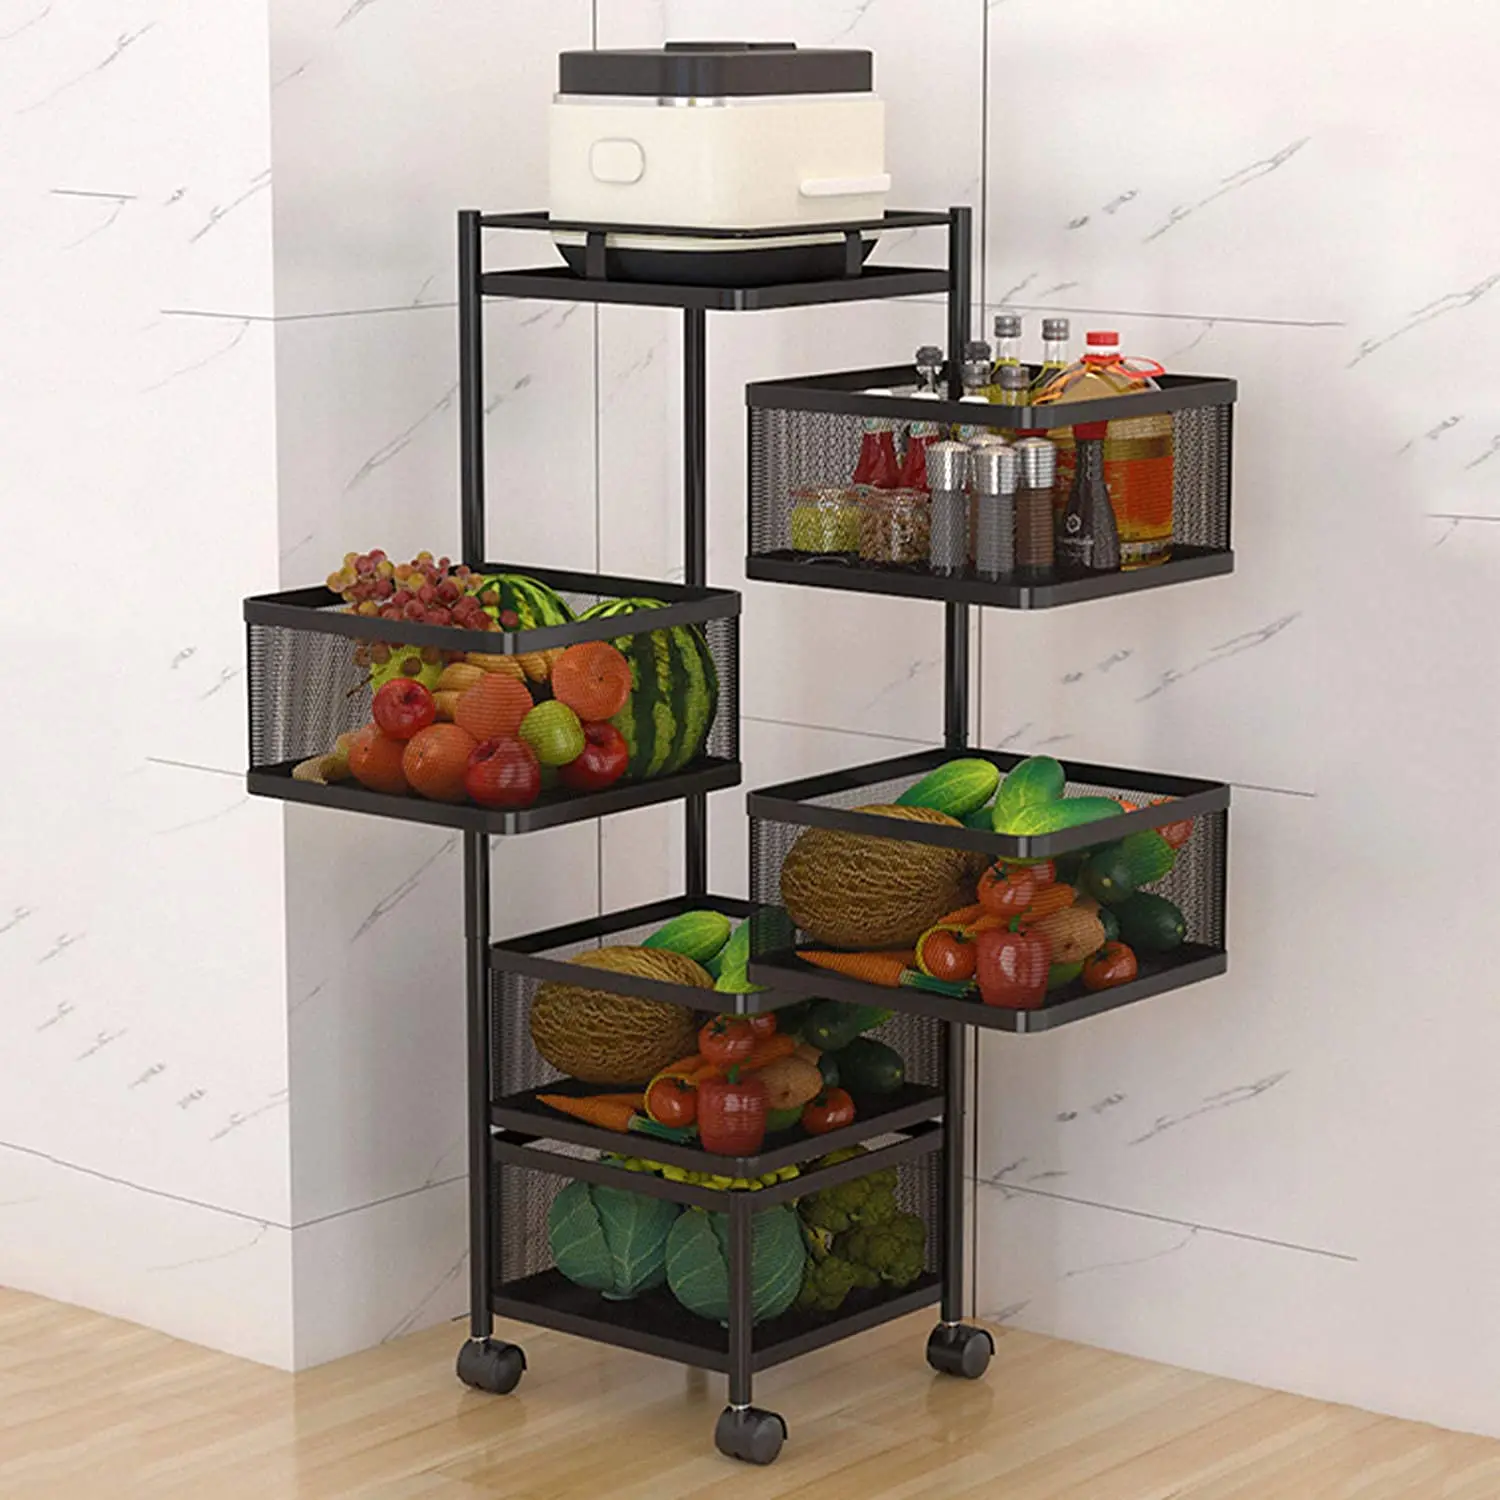 4 Tier Vegetable Rack Kitchen Storage Standing Shelves. Blue Shelf 